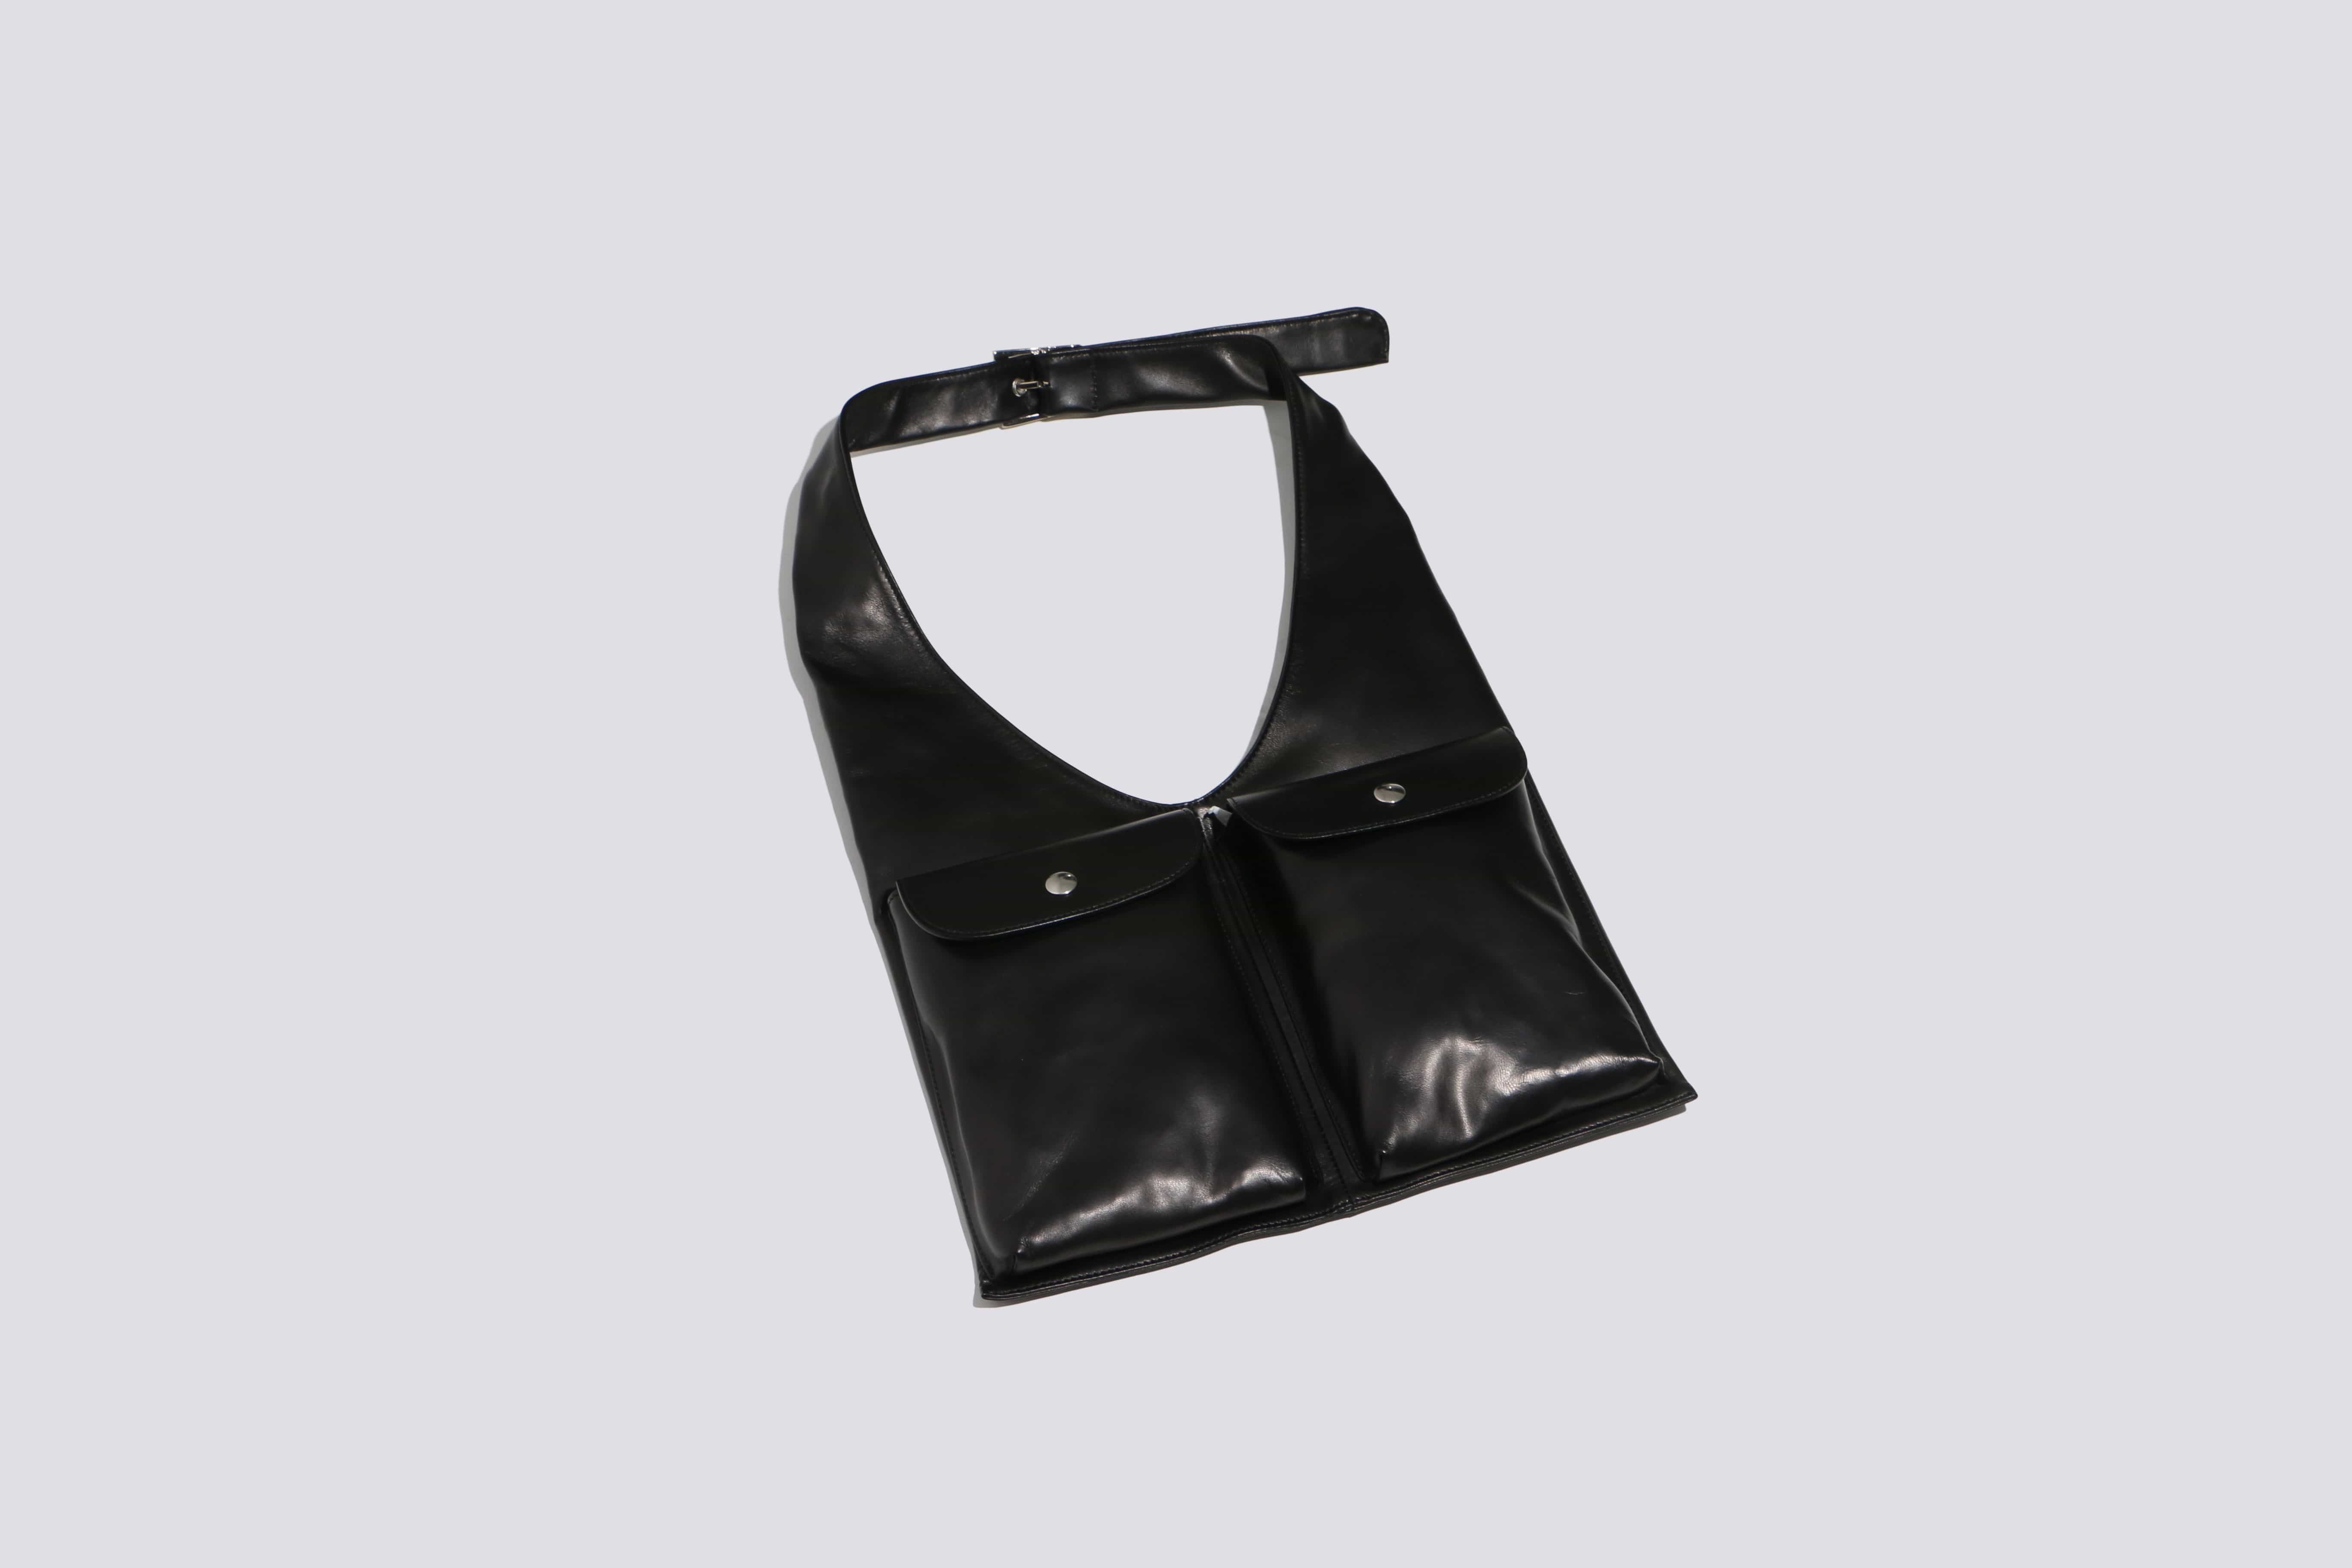 Moda Luxe Julian Faux Leather Tote Handbag Purse - Missing Shoulder Strap